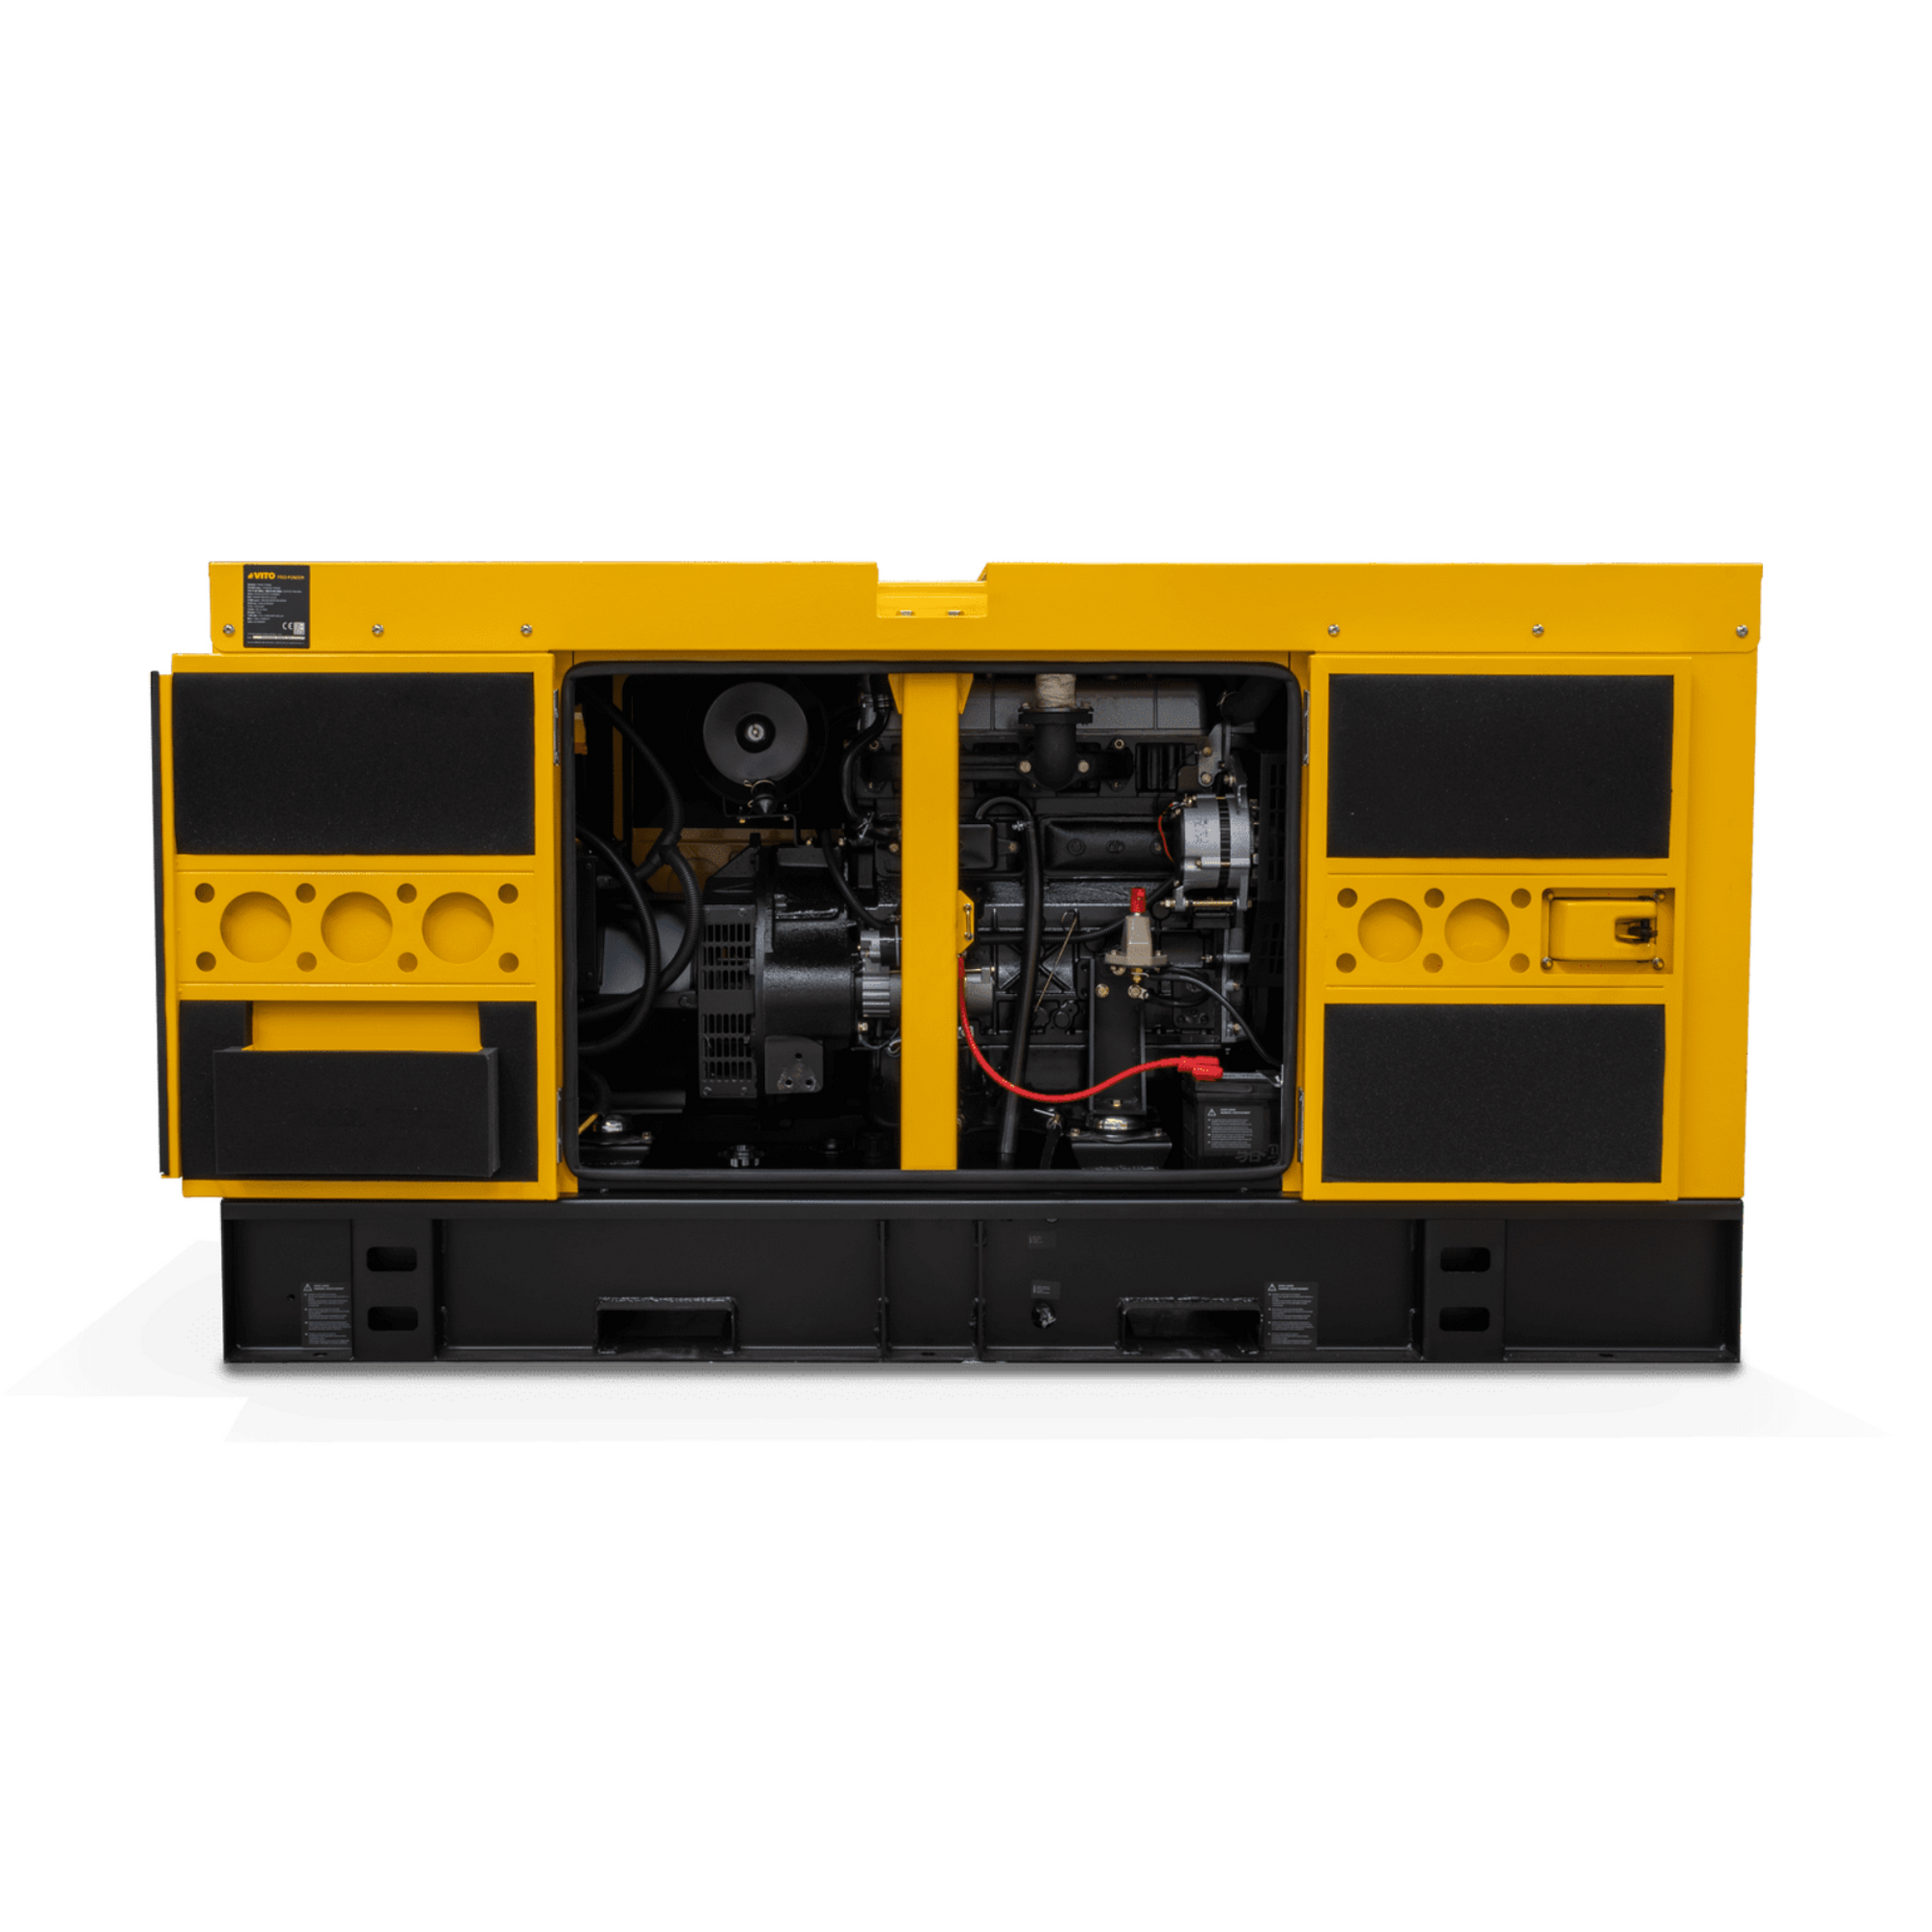 Diesel-Stromgenerator 'Pro Power' 44 kW 100 kVA + product picture